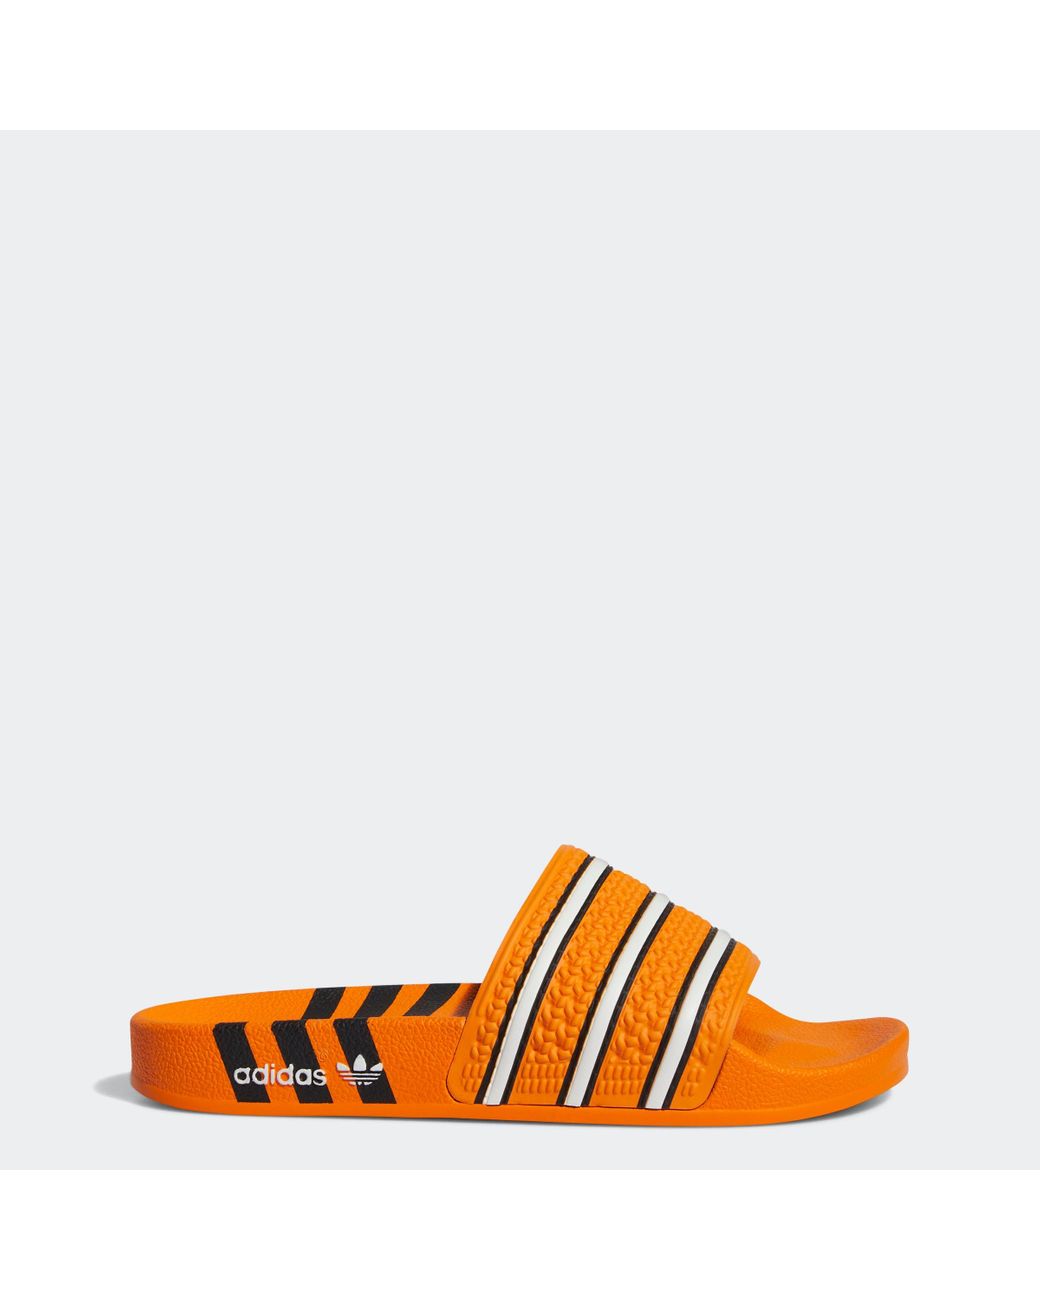 adidas Adilette Slides in Orange | Lyst